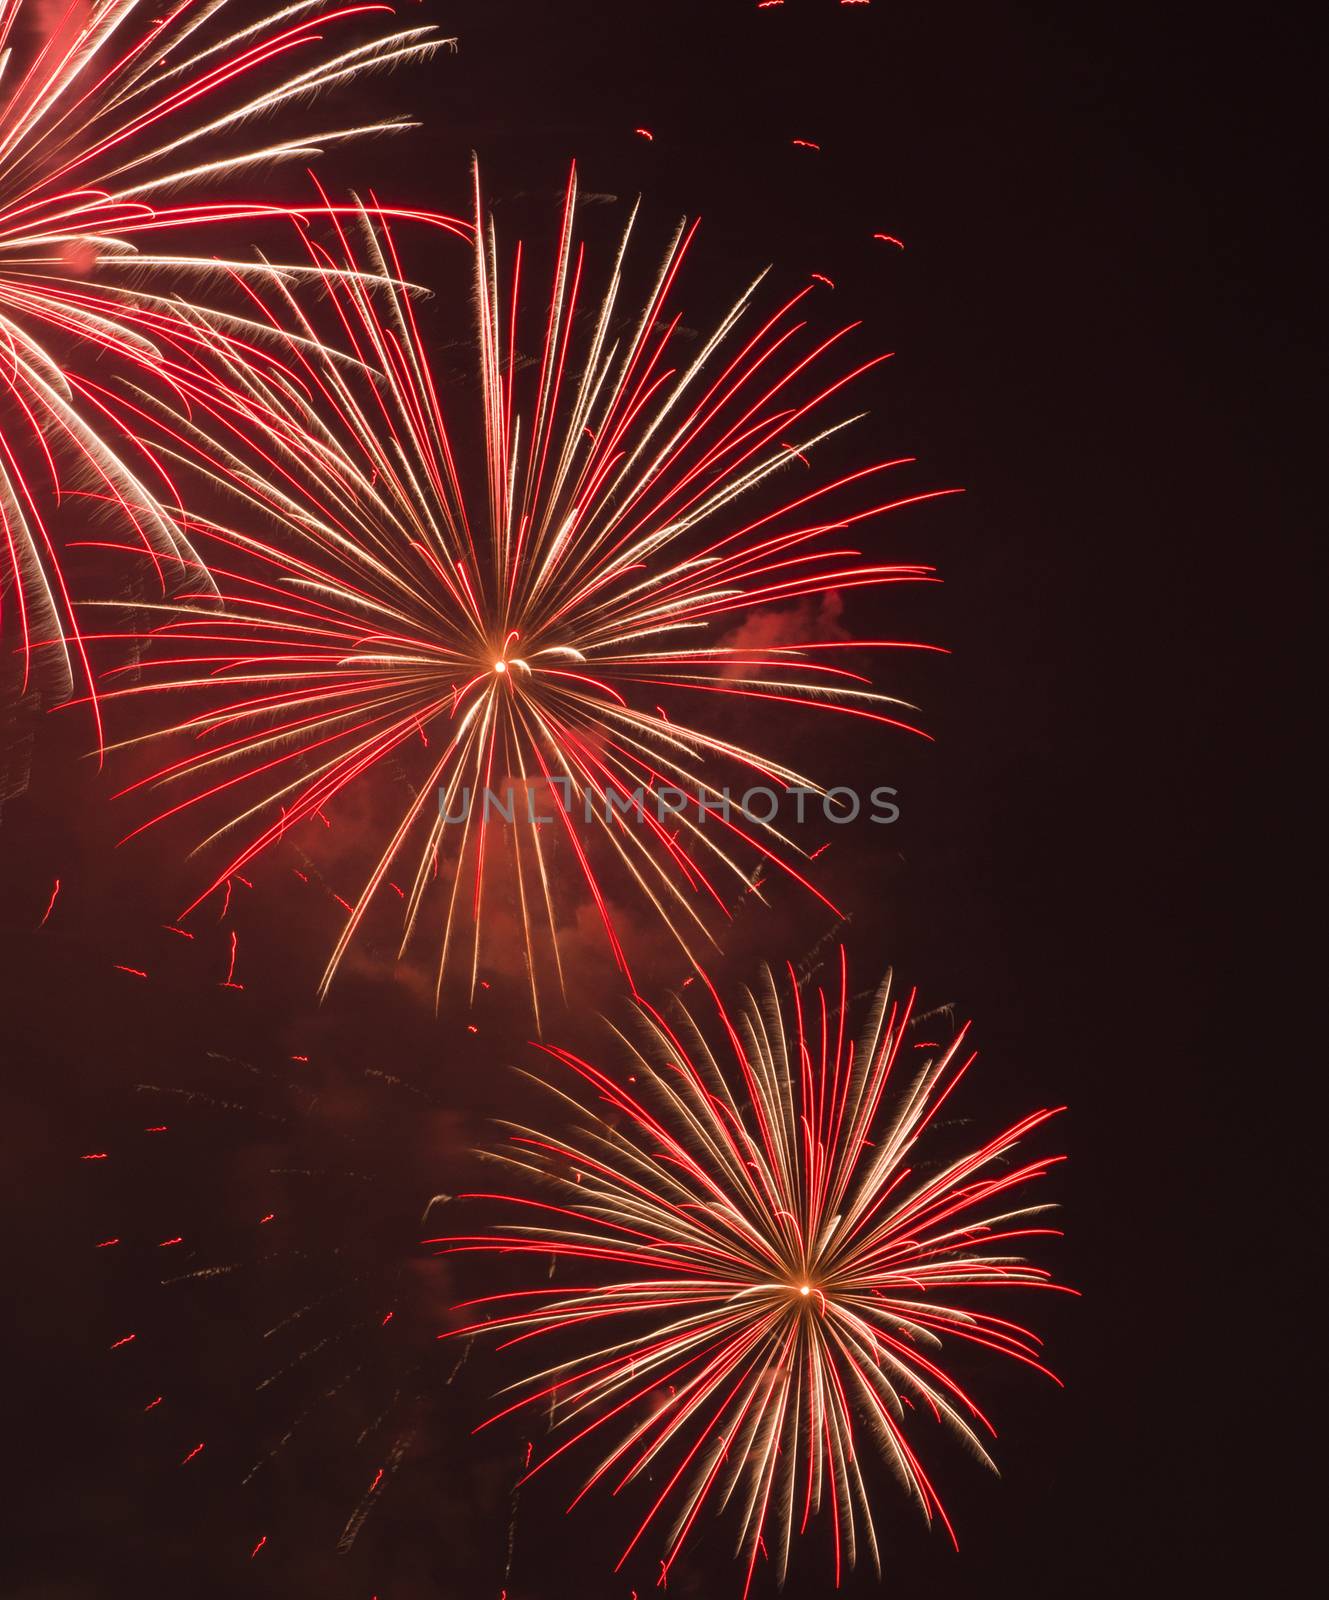 Colourful fireworks display in Brisbane City, Queensland, Australia